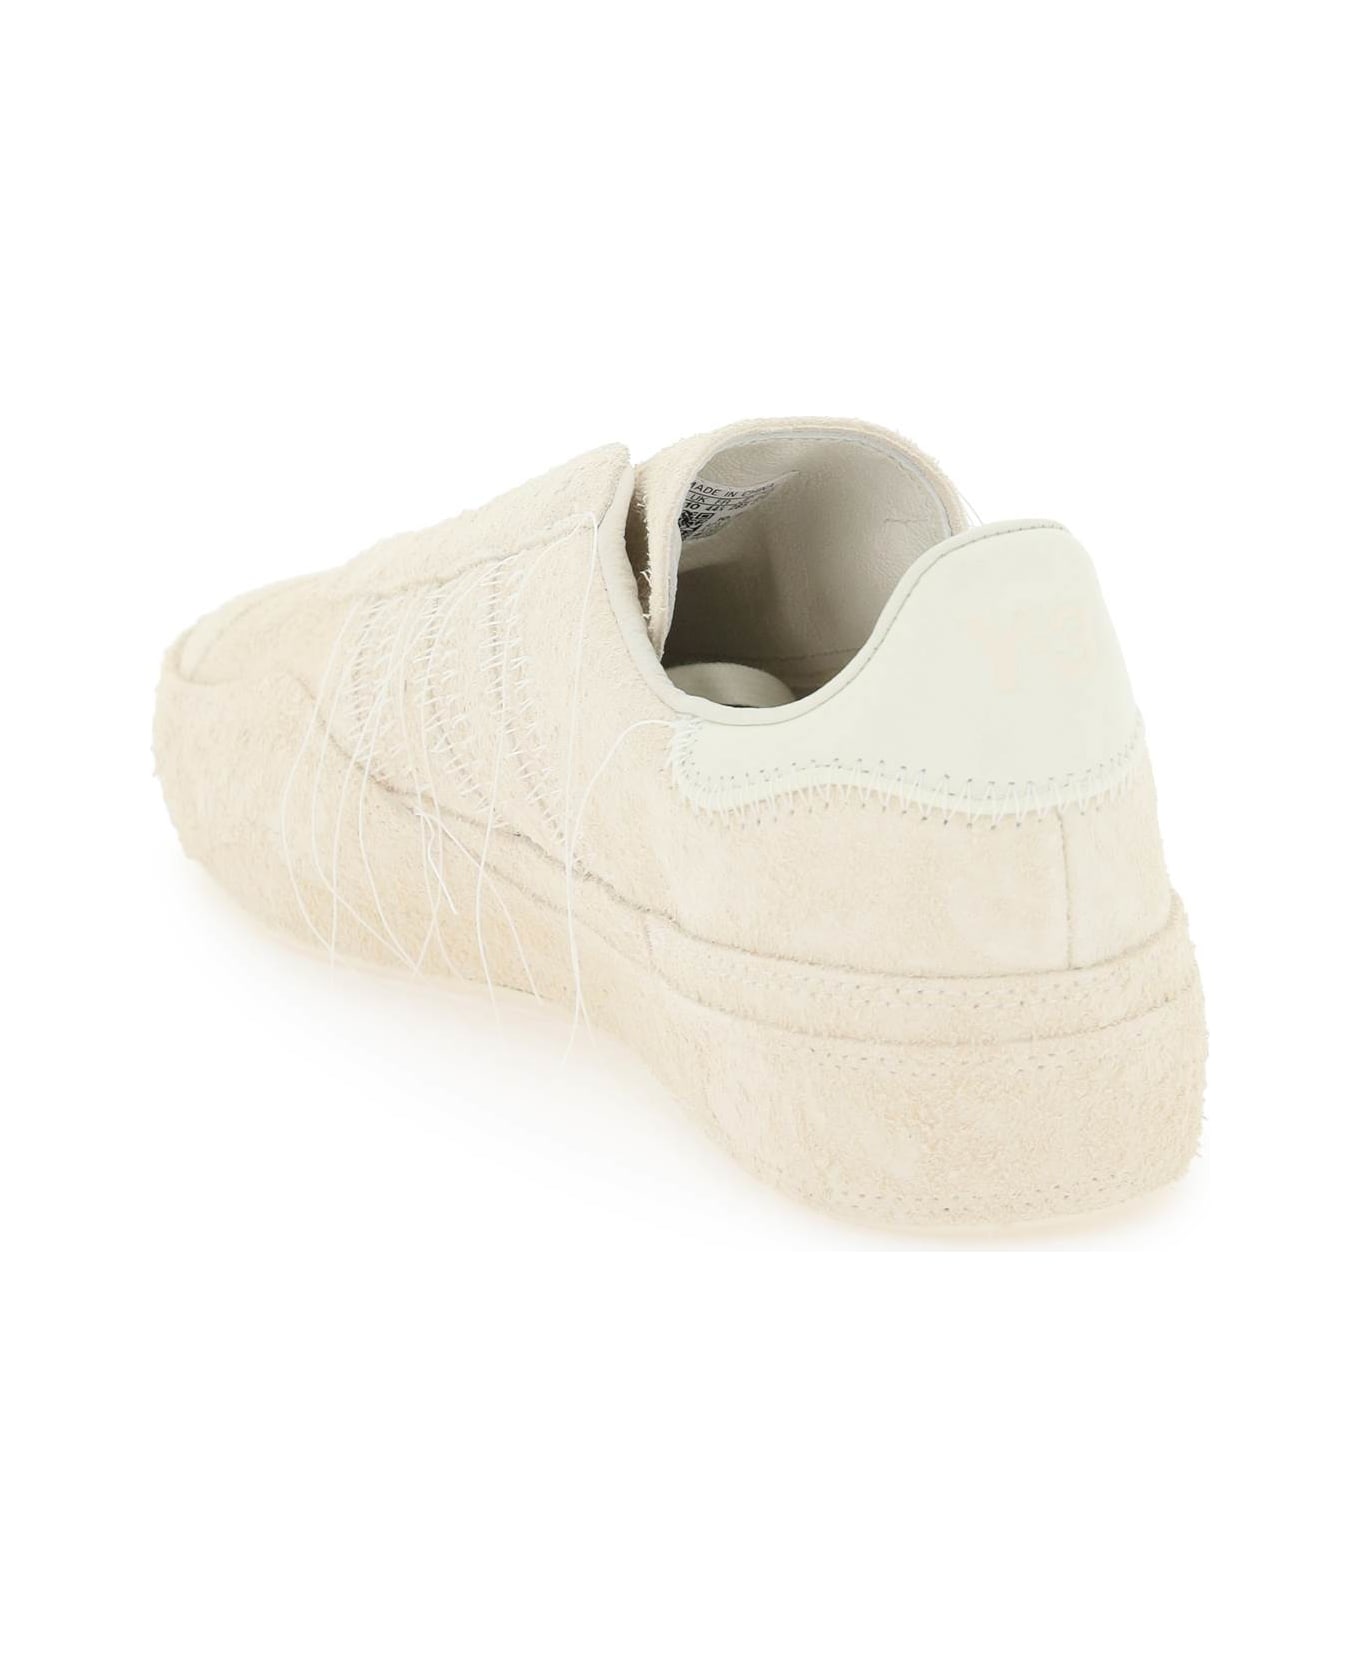 Y-3 Gazelle Sneakers - White